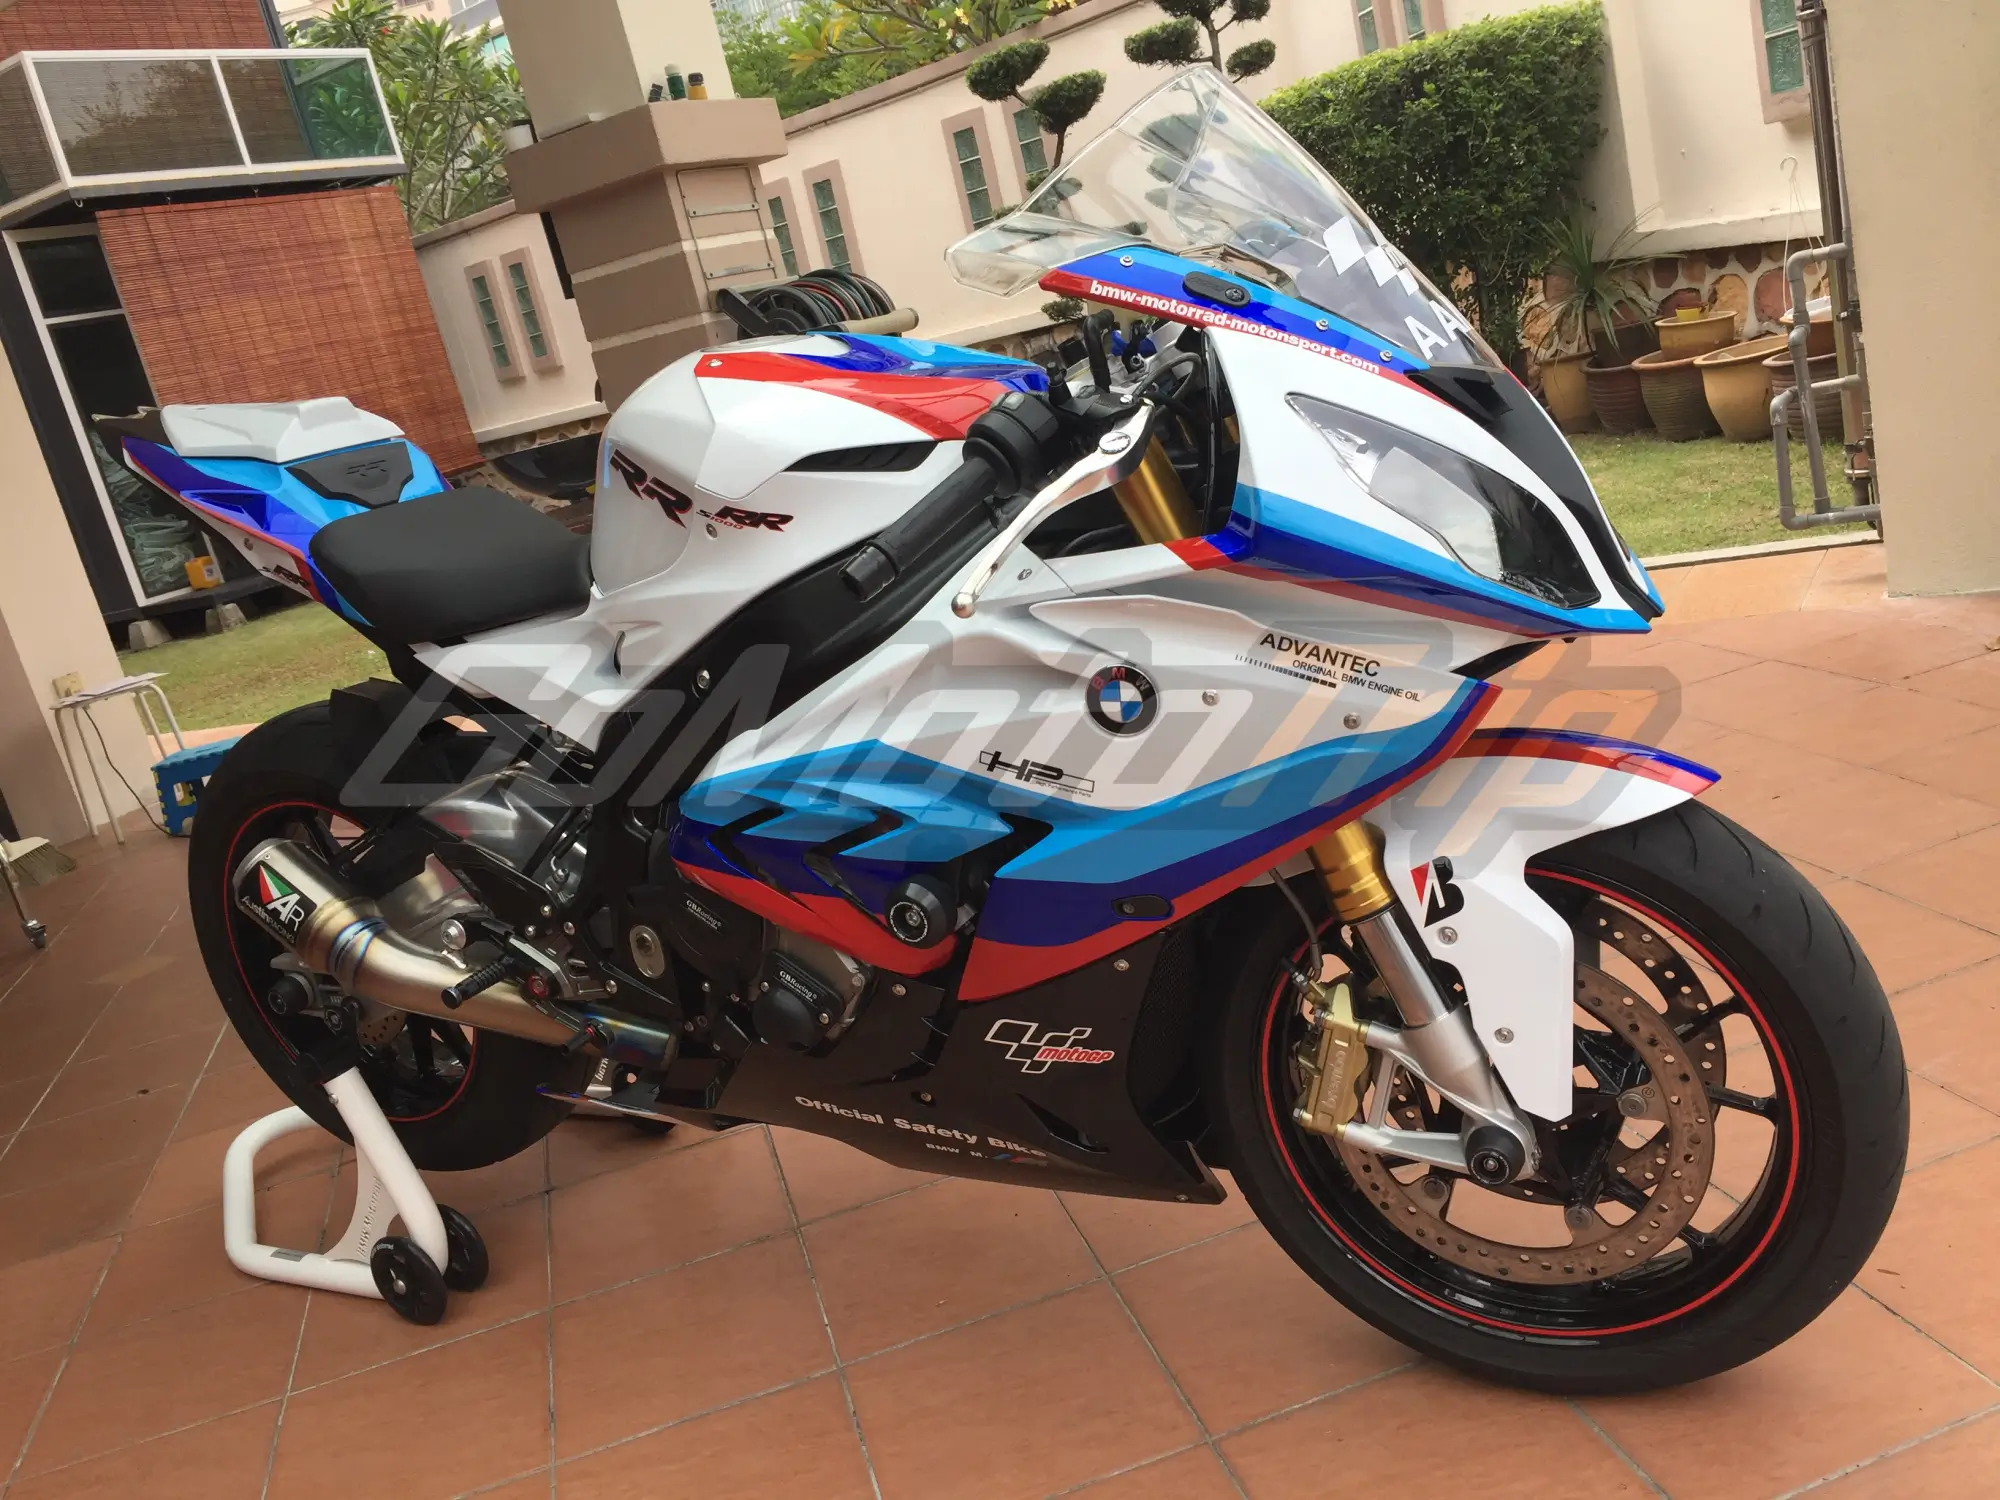 Rider-Review-Ahmad-BMW-S1000RR-MotoGP-Safety-Bike-Fairing-2